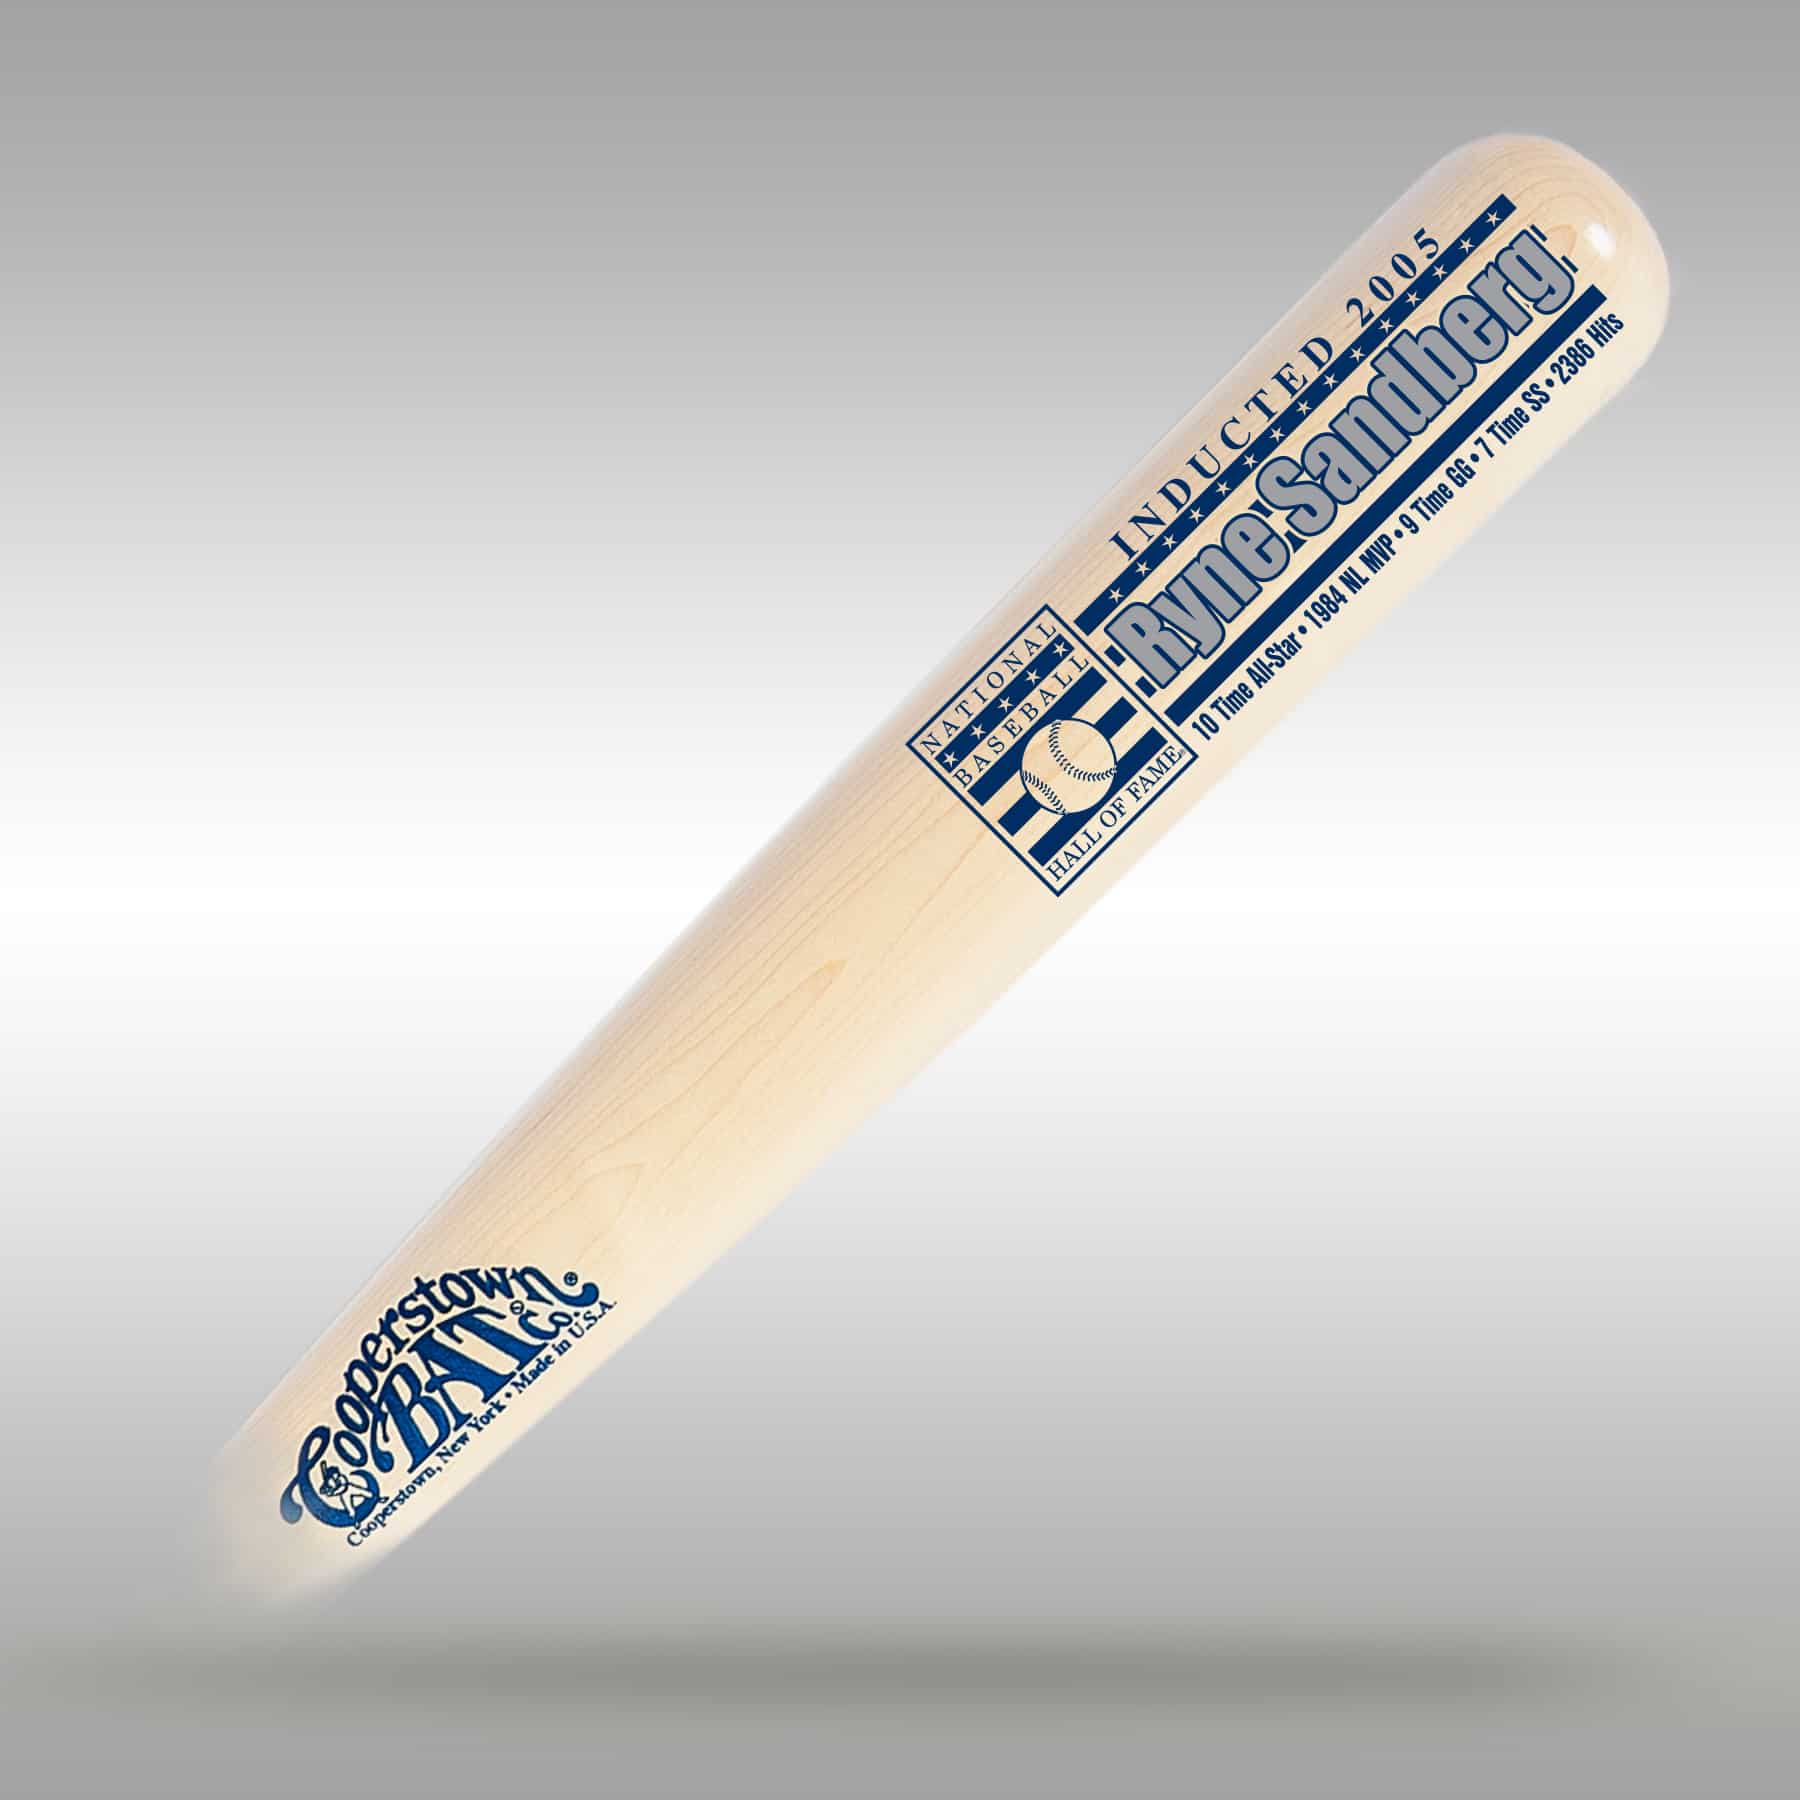 Ryne Sandberg Baseball HOF Stats Bat - Cooperstown Bat Company